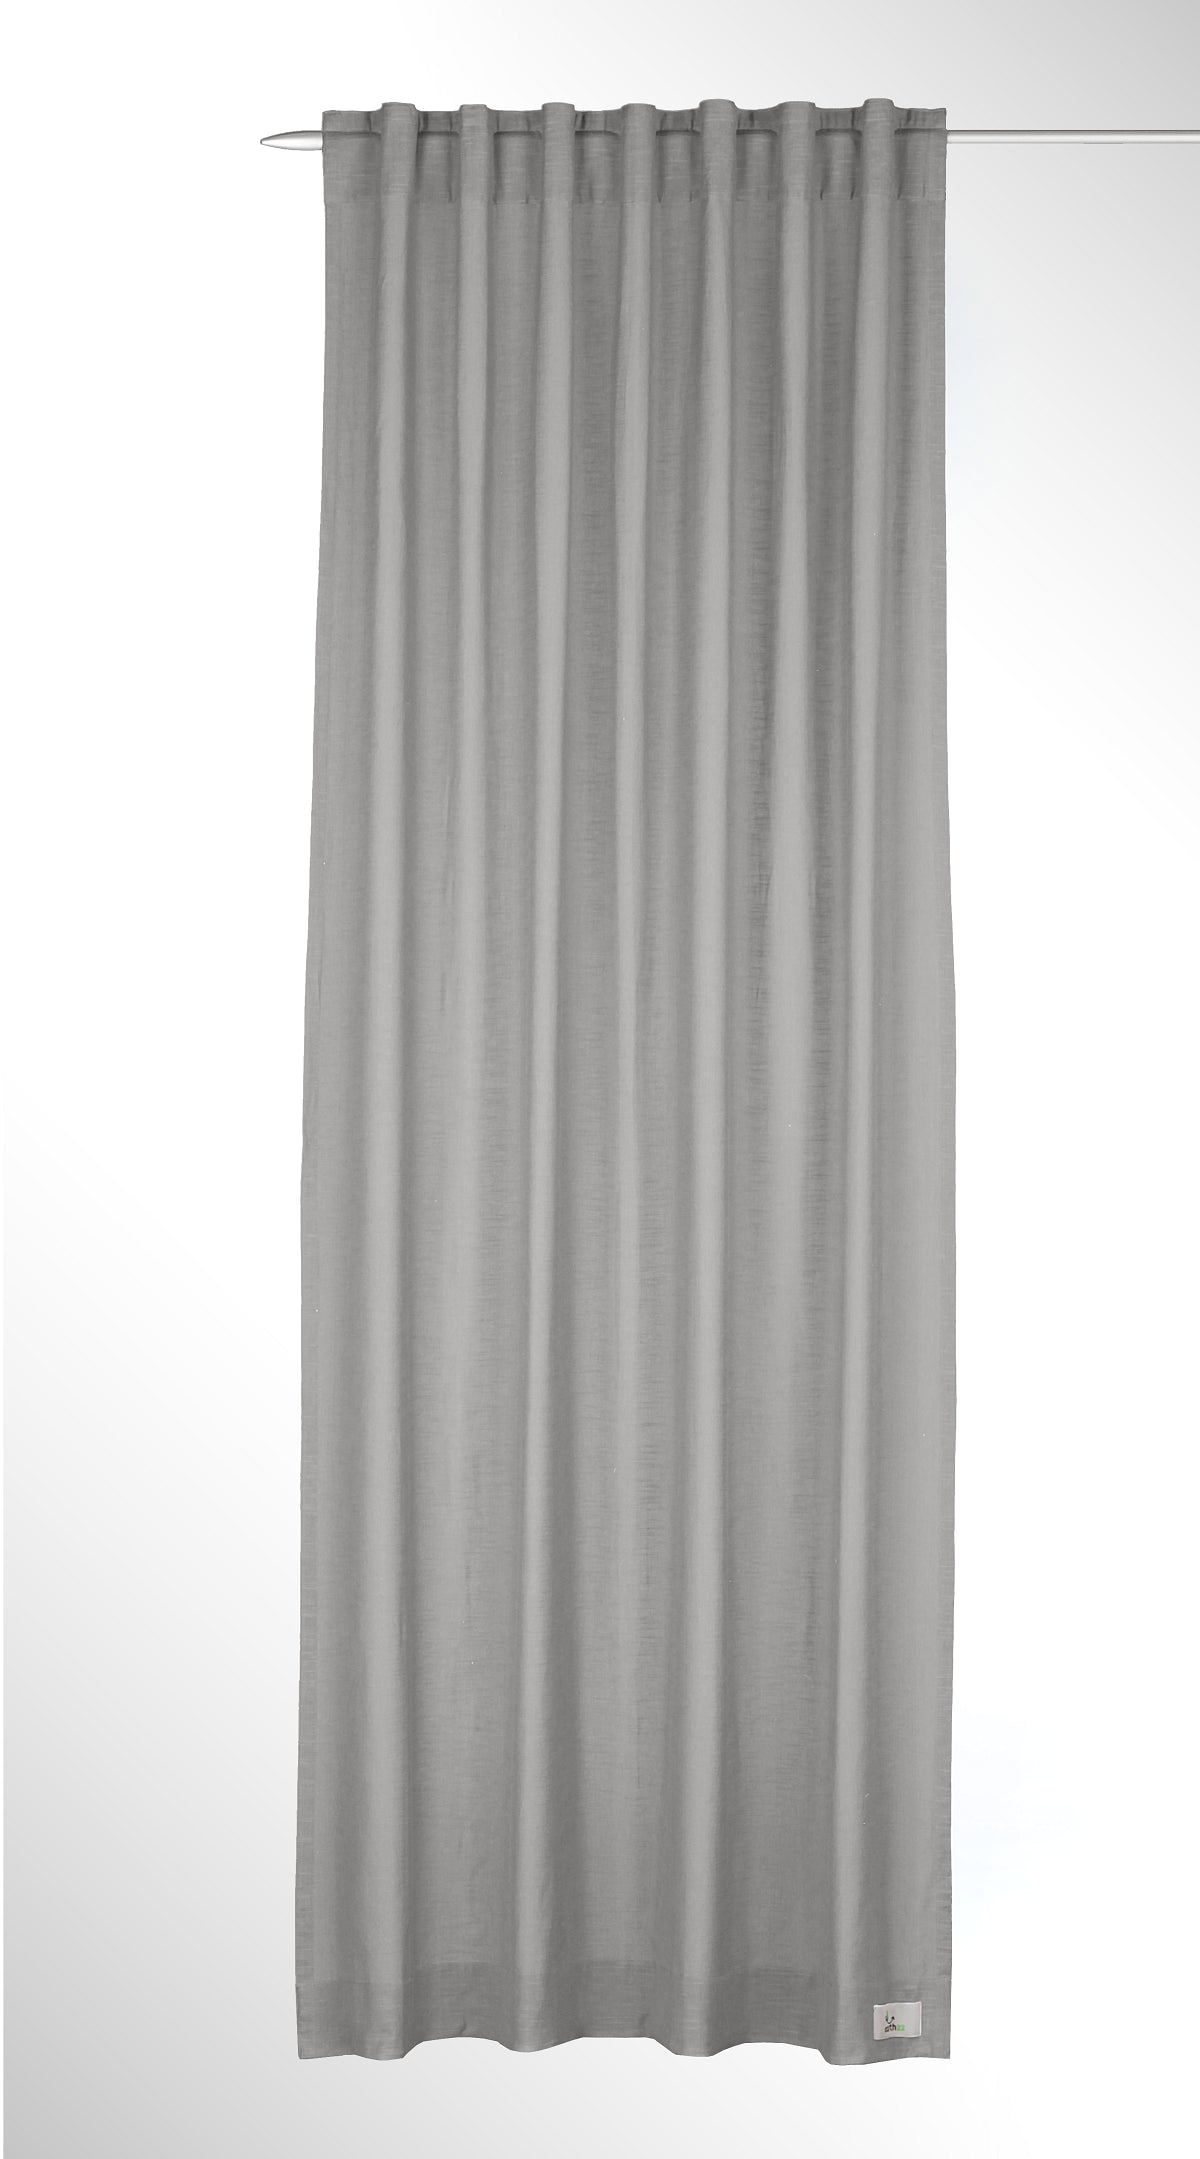 Day curtain silver Waris